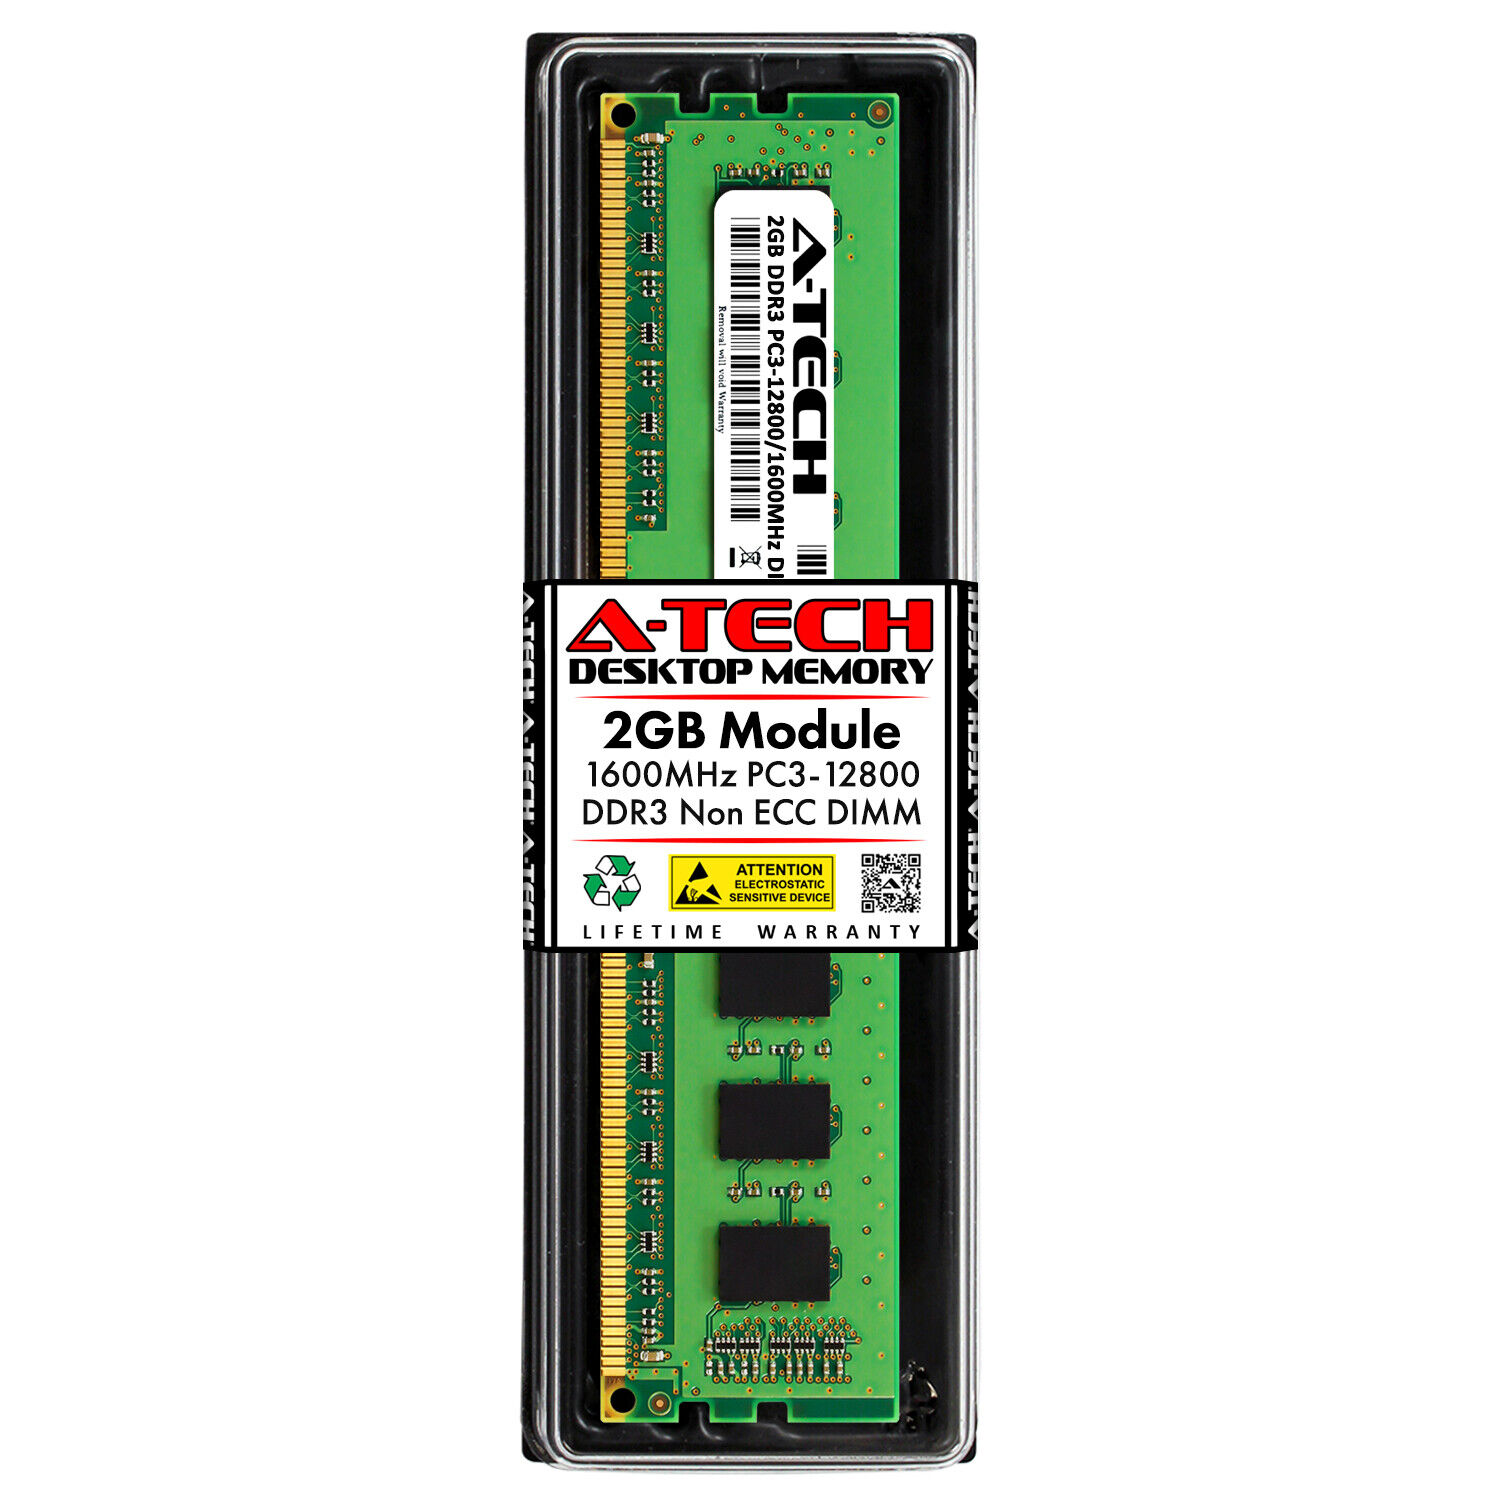 Adata AX3U1600GB2G9DG2 A-Tech Equivalent 2GB DDR3 1600 12800 Desktop Memory RAM